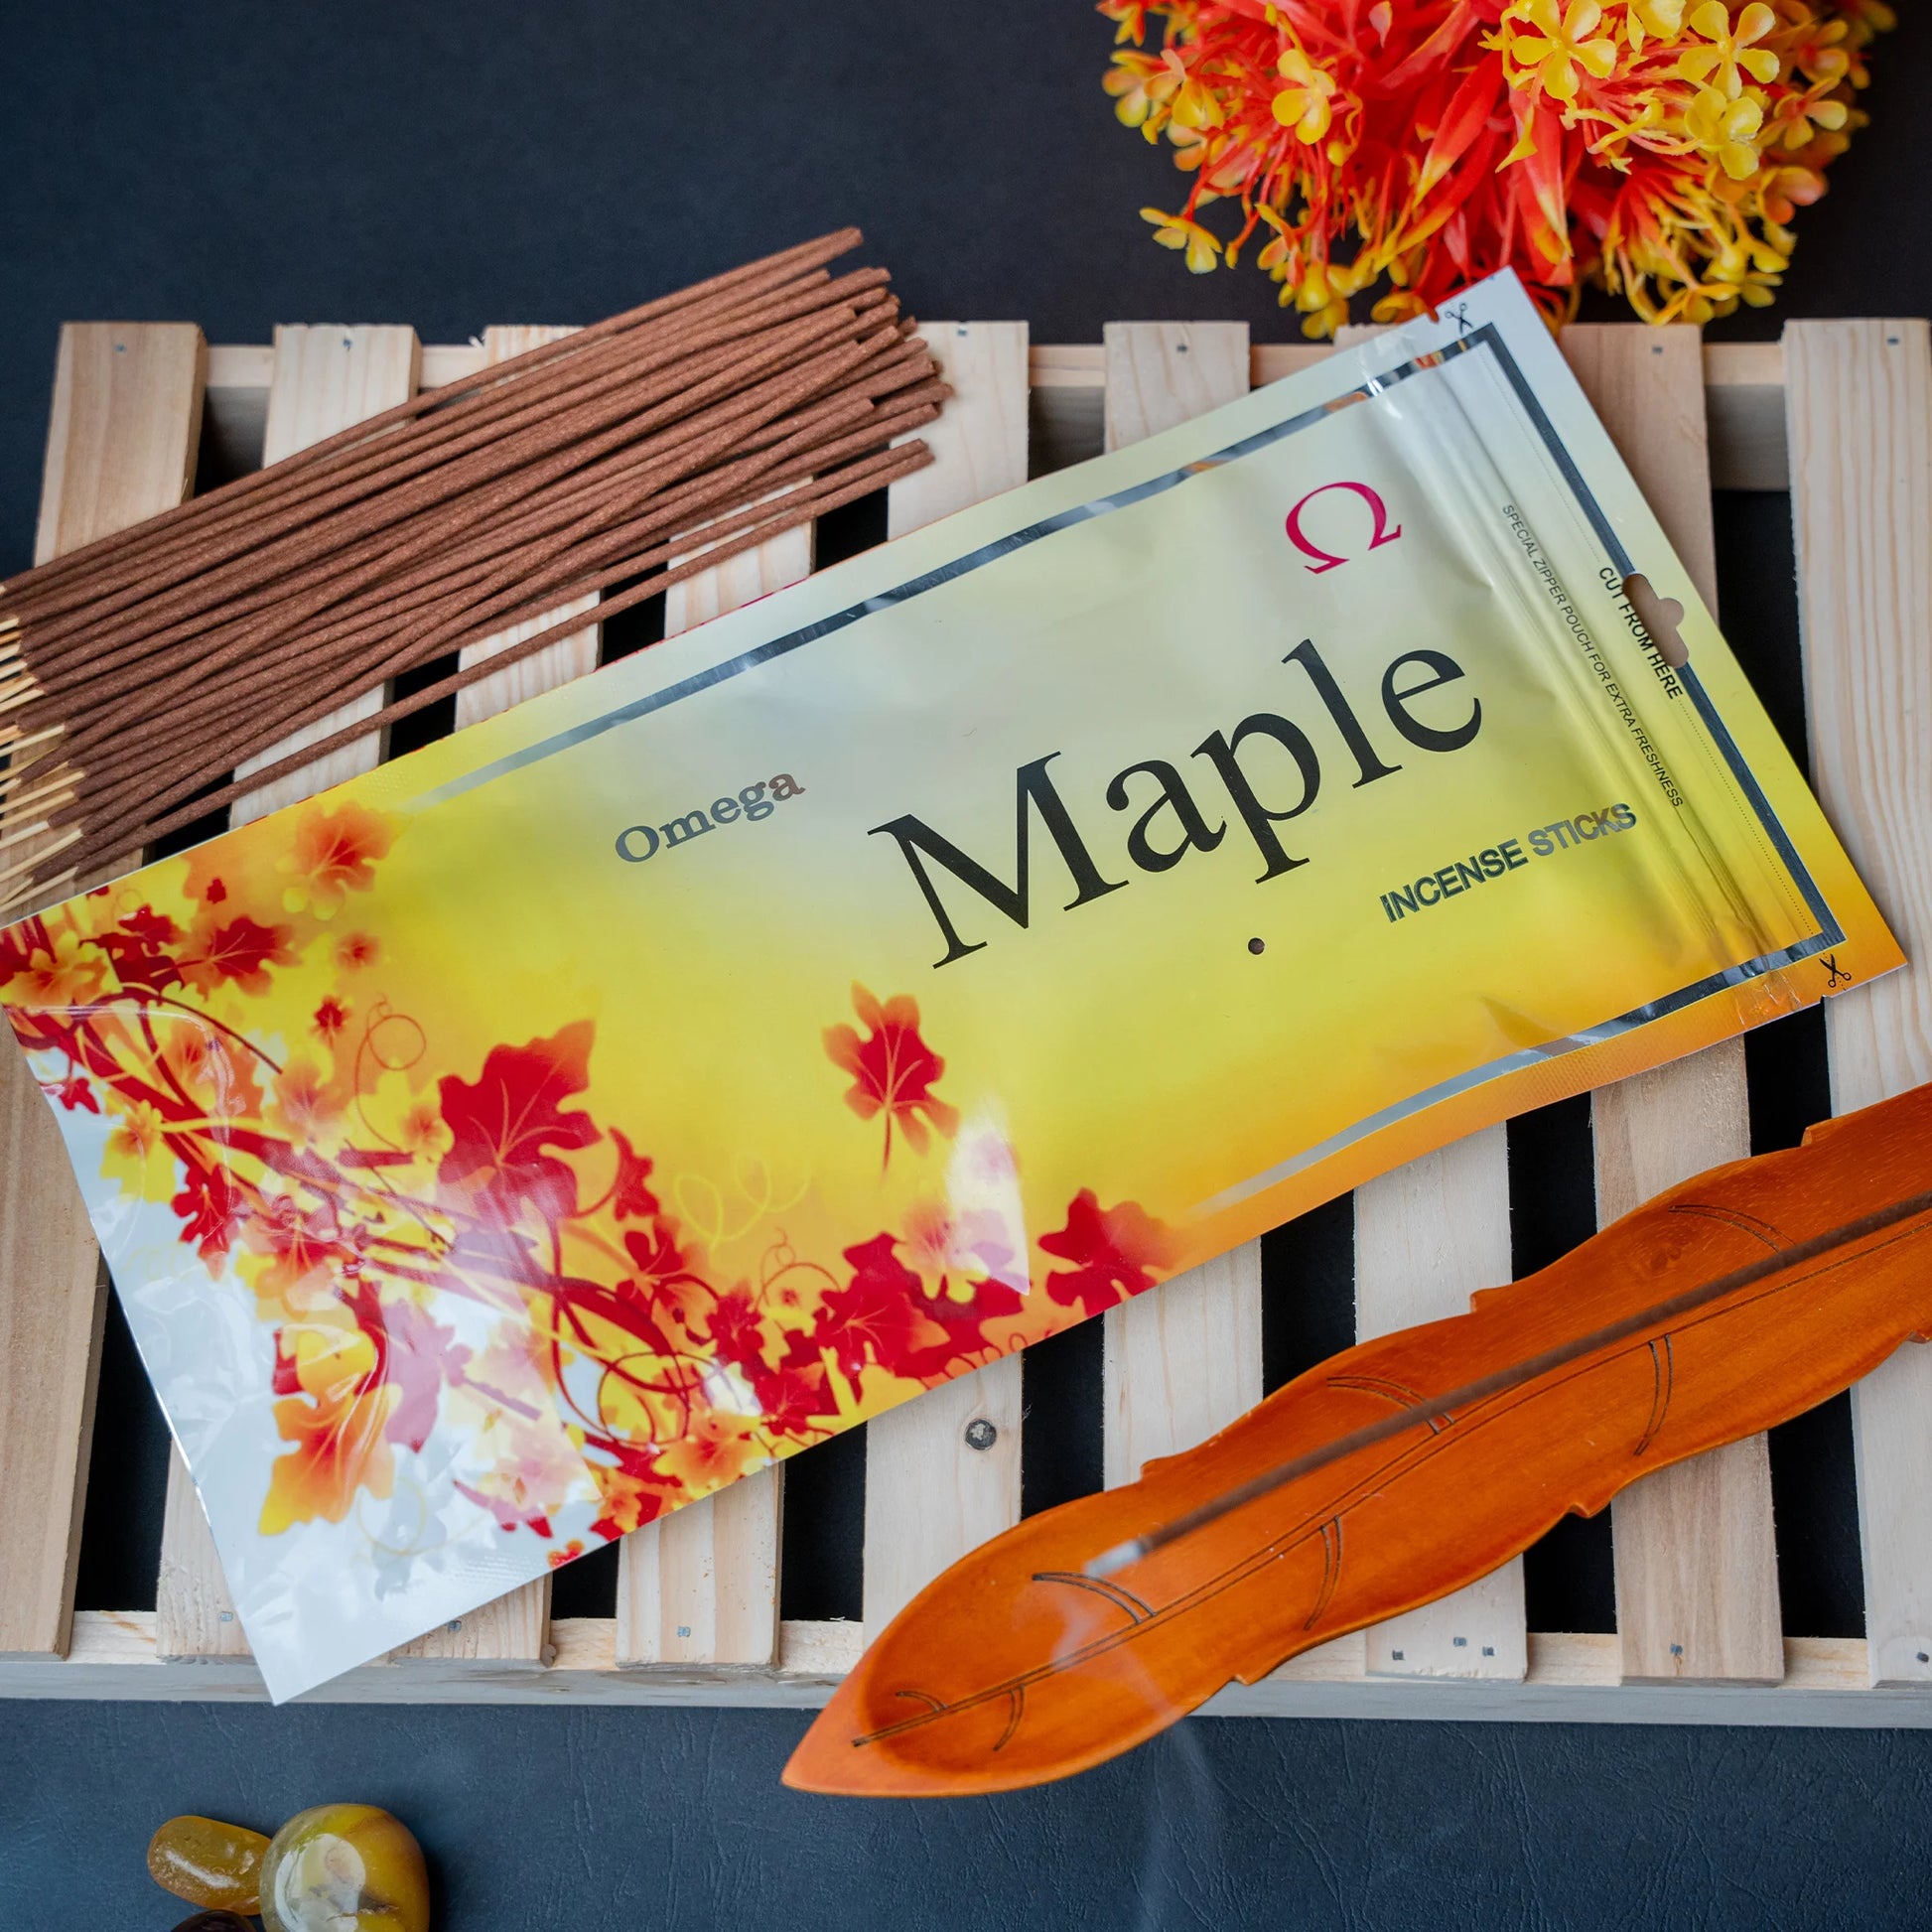 maple-premium-incense-sticks-zipper-pouch